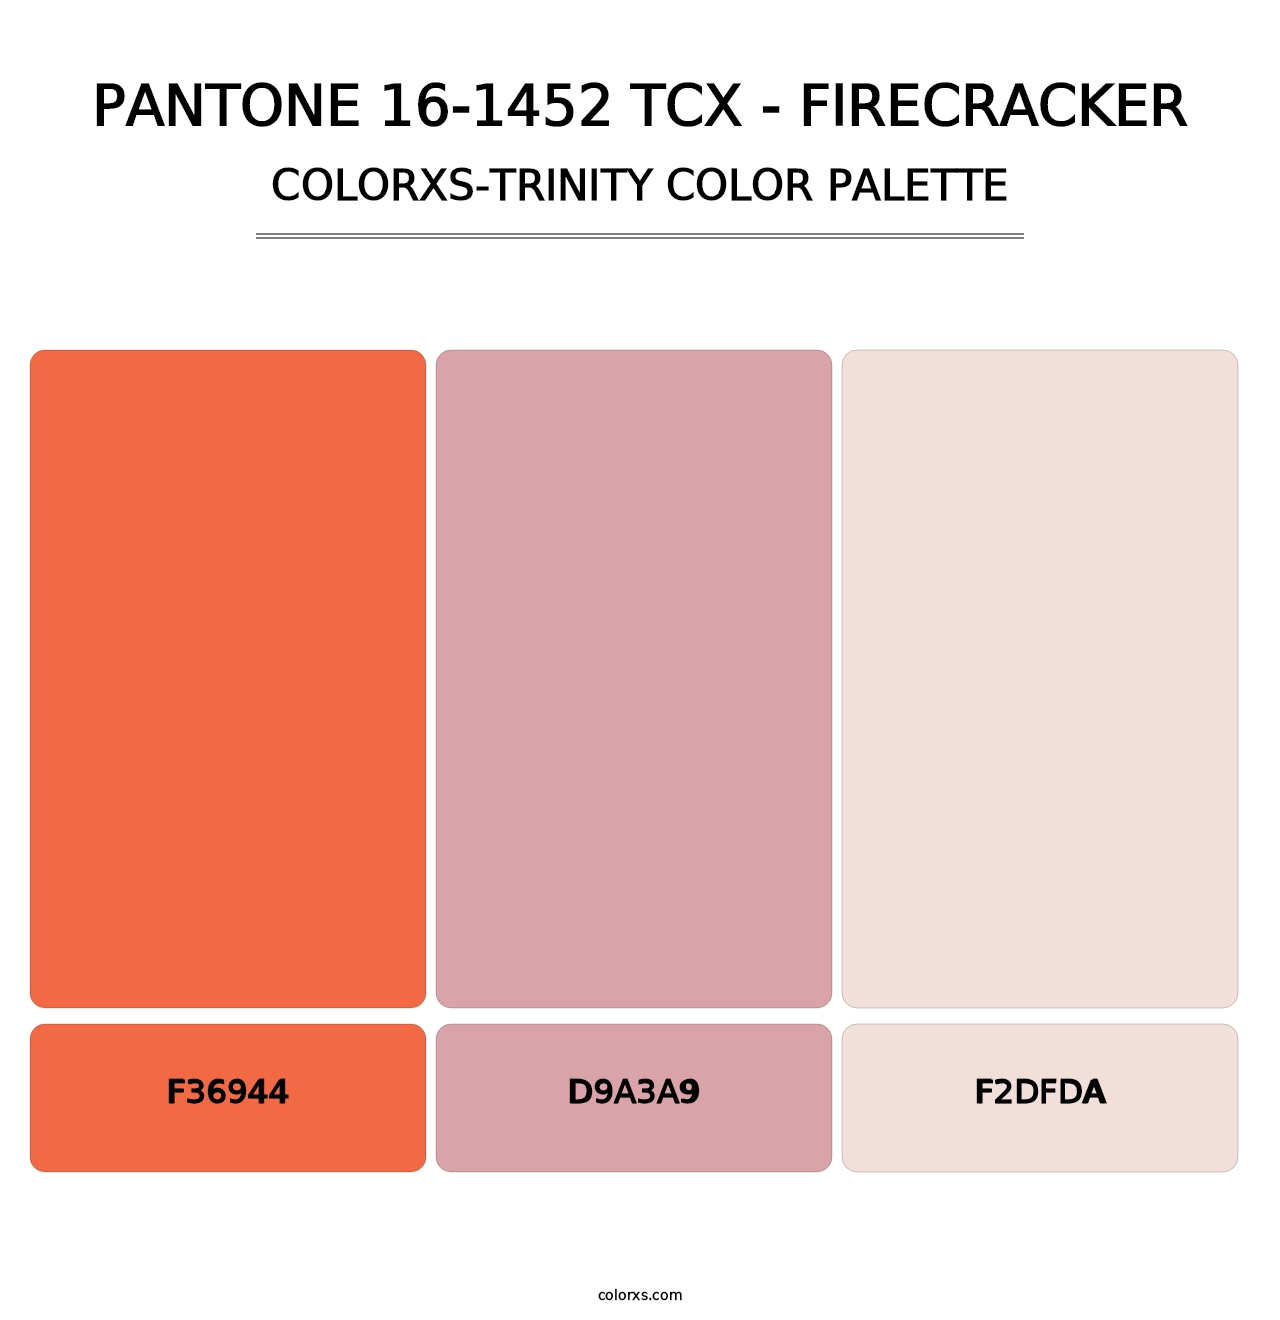 PANTONE 16-1452 TCX - Firecracker - Colorxs Trinity Palette